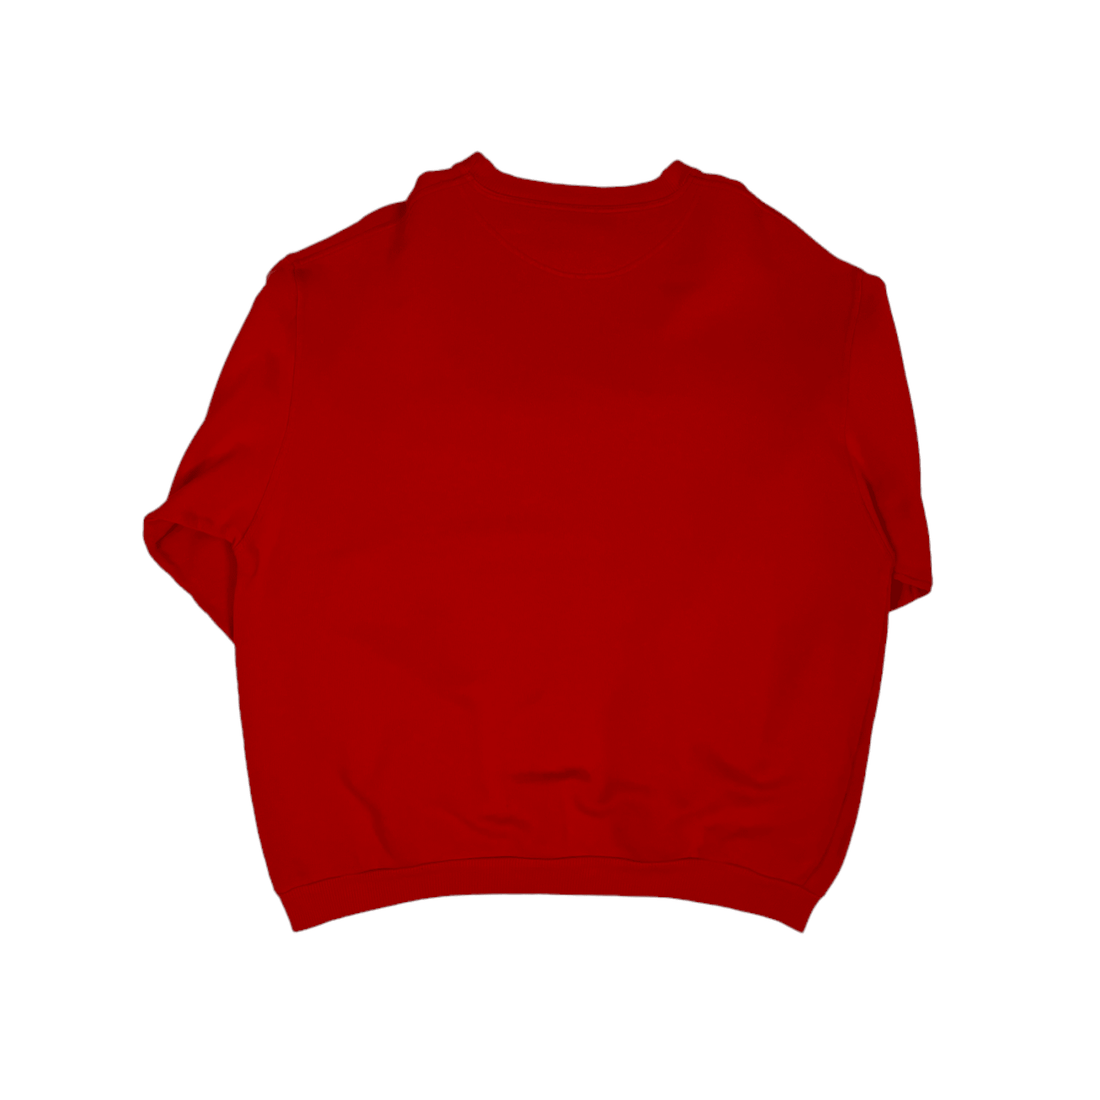 Vintage 90s Red Trussardi Jeans Sweatshirt - Large - The Streetwear Studio